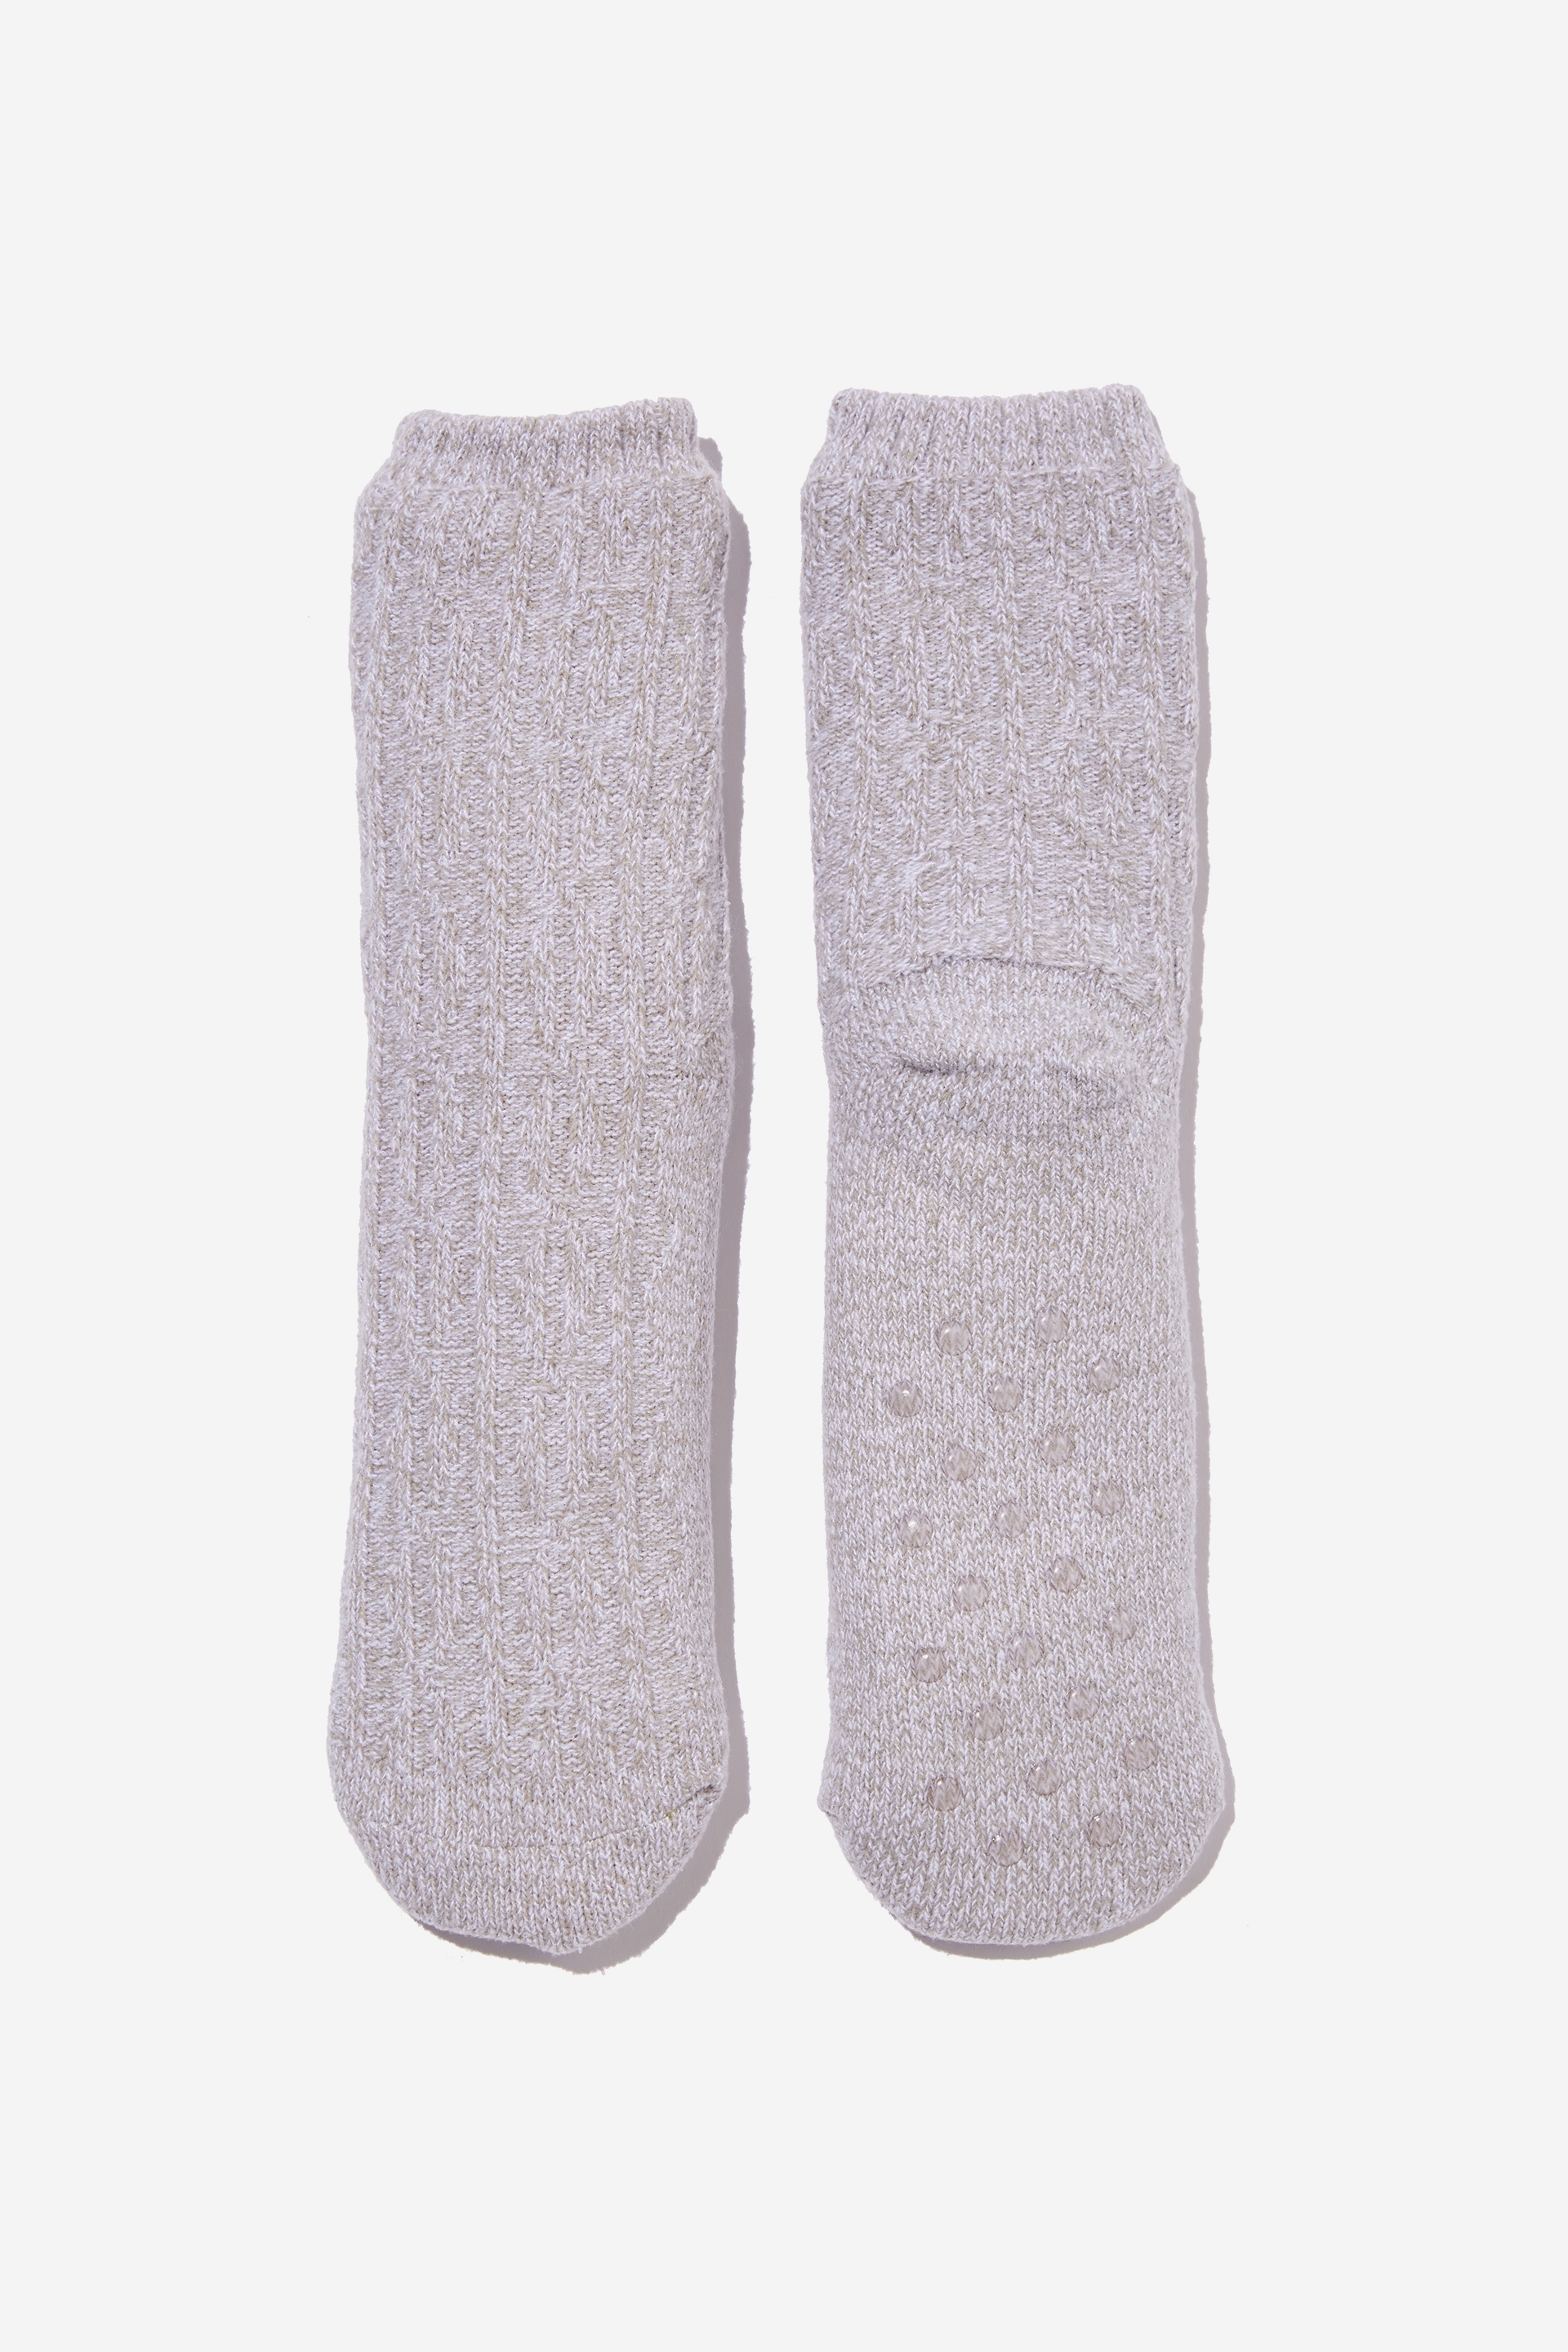 Rubi - Loungin Sock - Washed grey